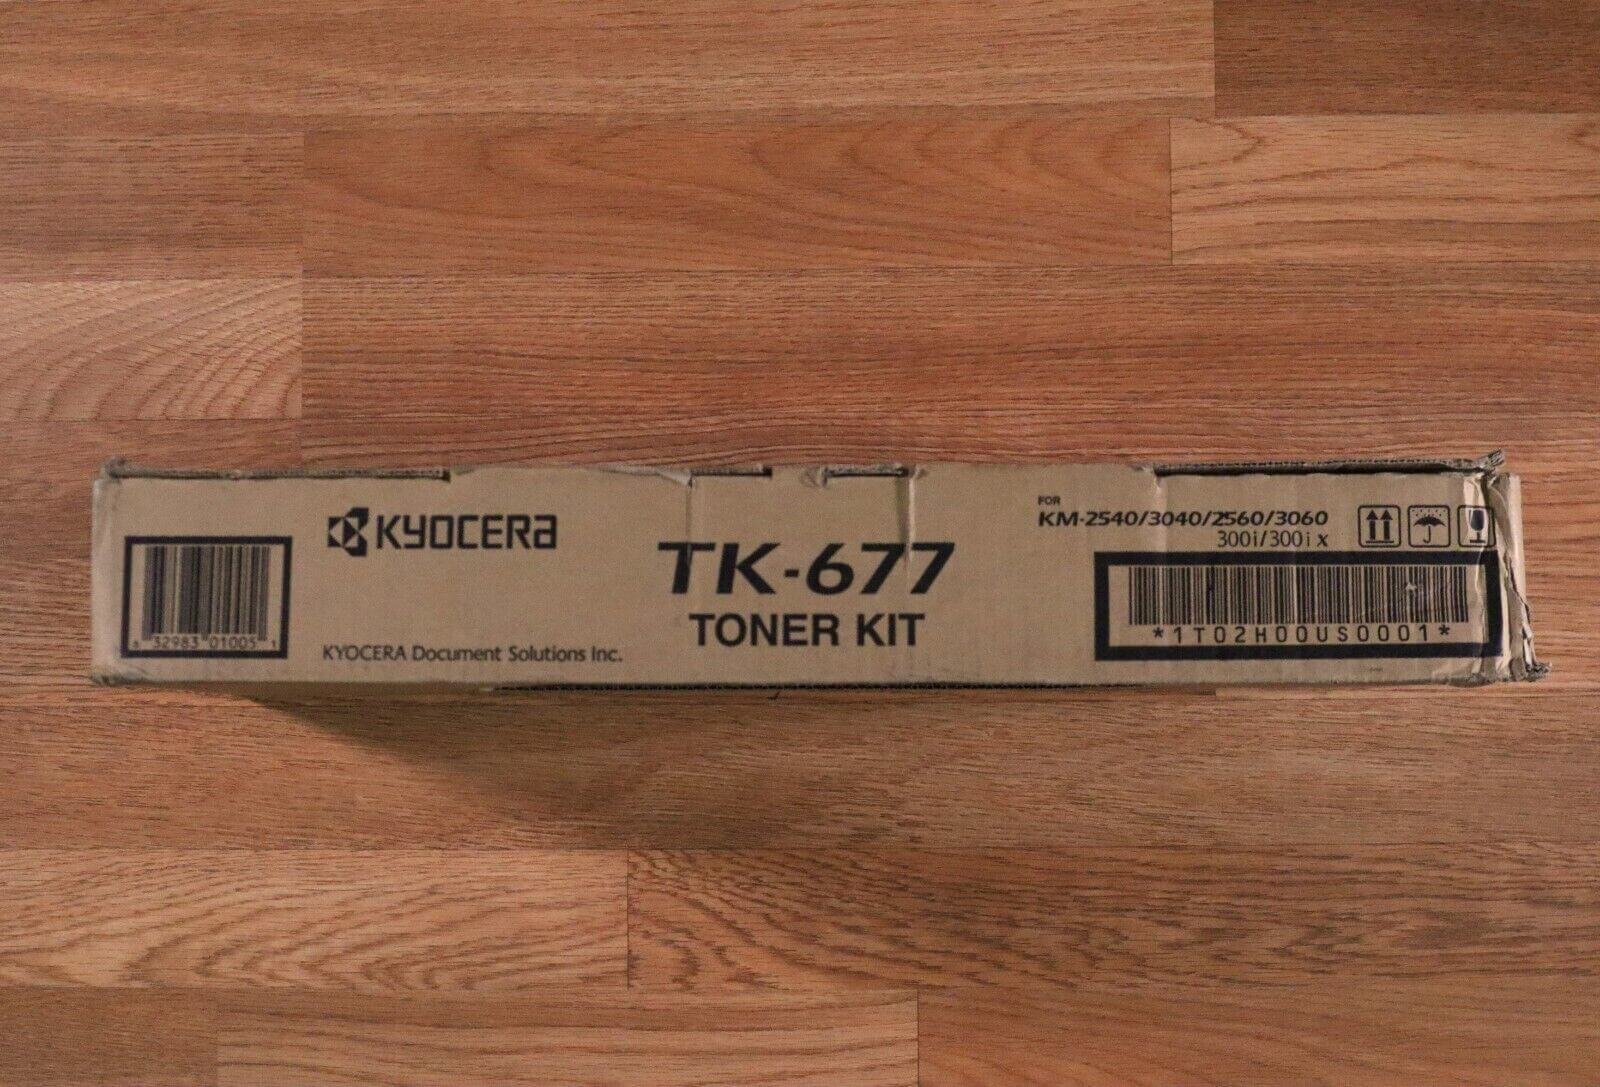 Genuine Kyocera TK-677 Toner Kit For KM-2540/3040/2560/3060/300i/300i x Same Day - copier-clearance-center